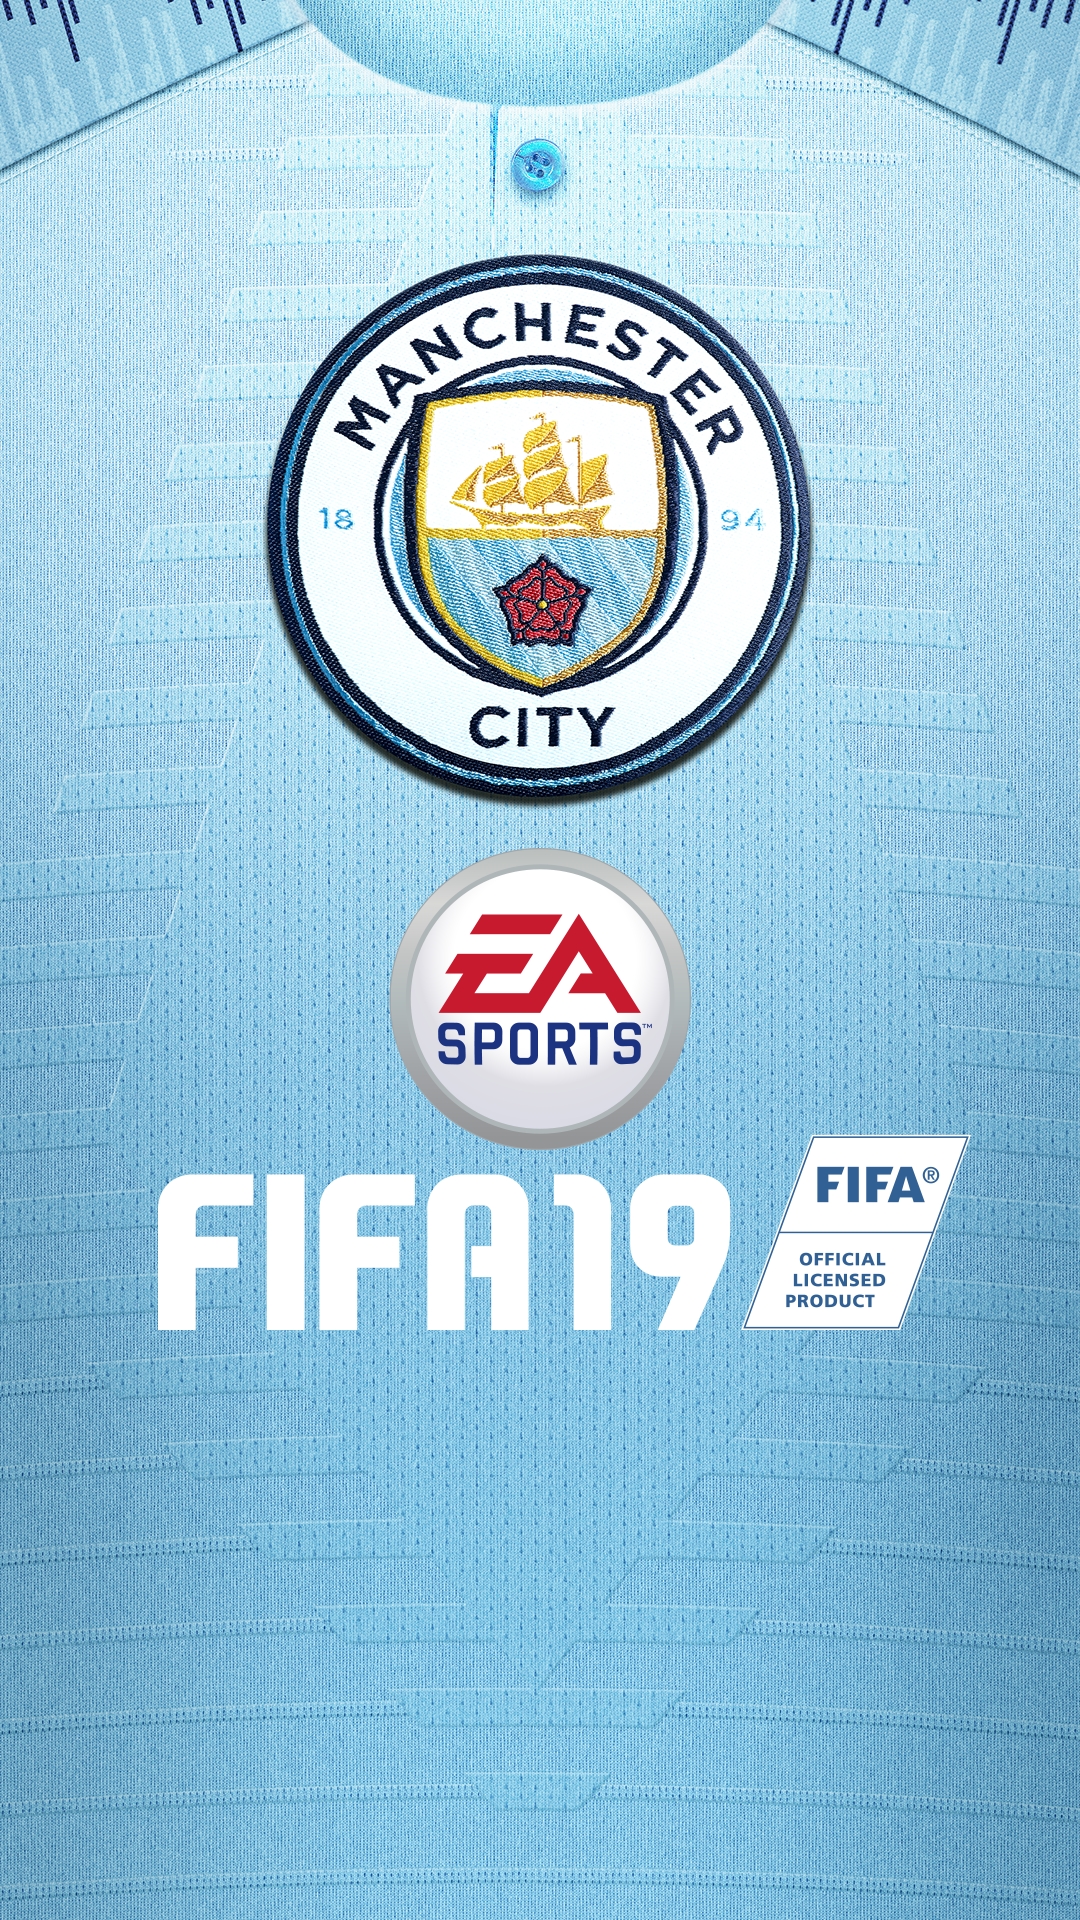 FIFA 19 - Manchester City F.C. Club Pack - EA SPORTS1080 x 1920